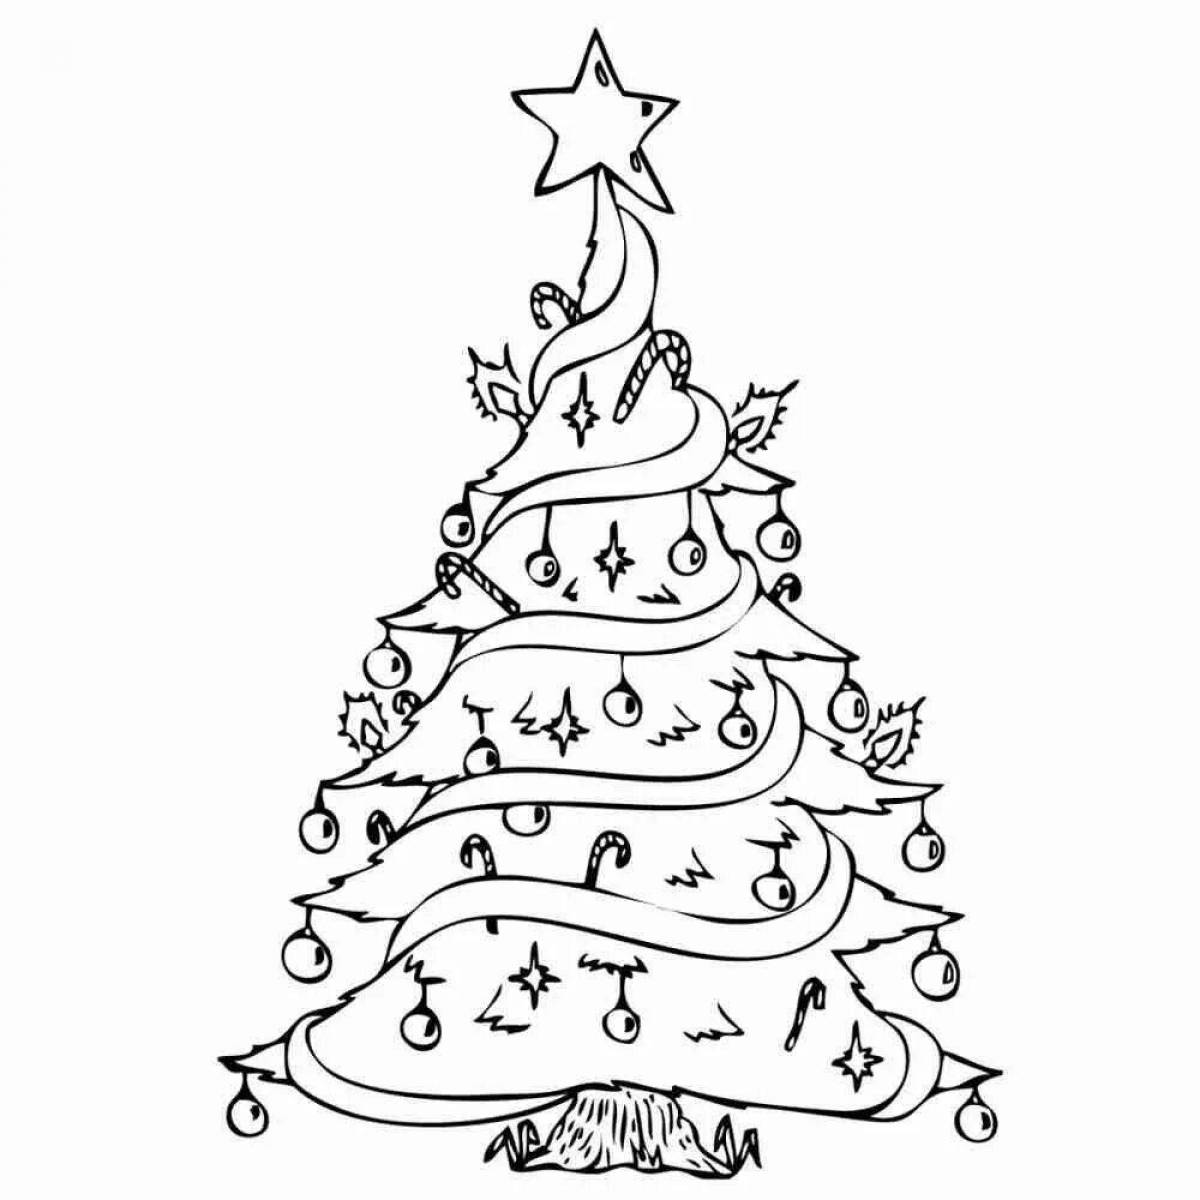 Christmas tree inspirational coloring card